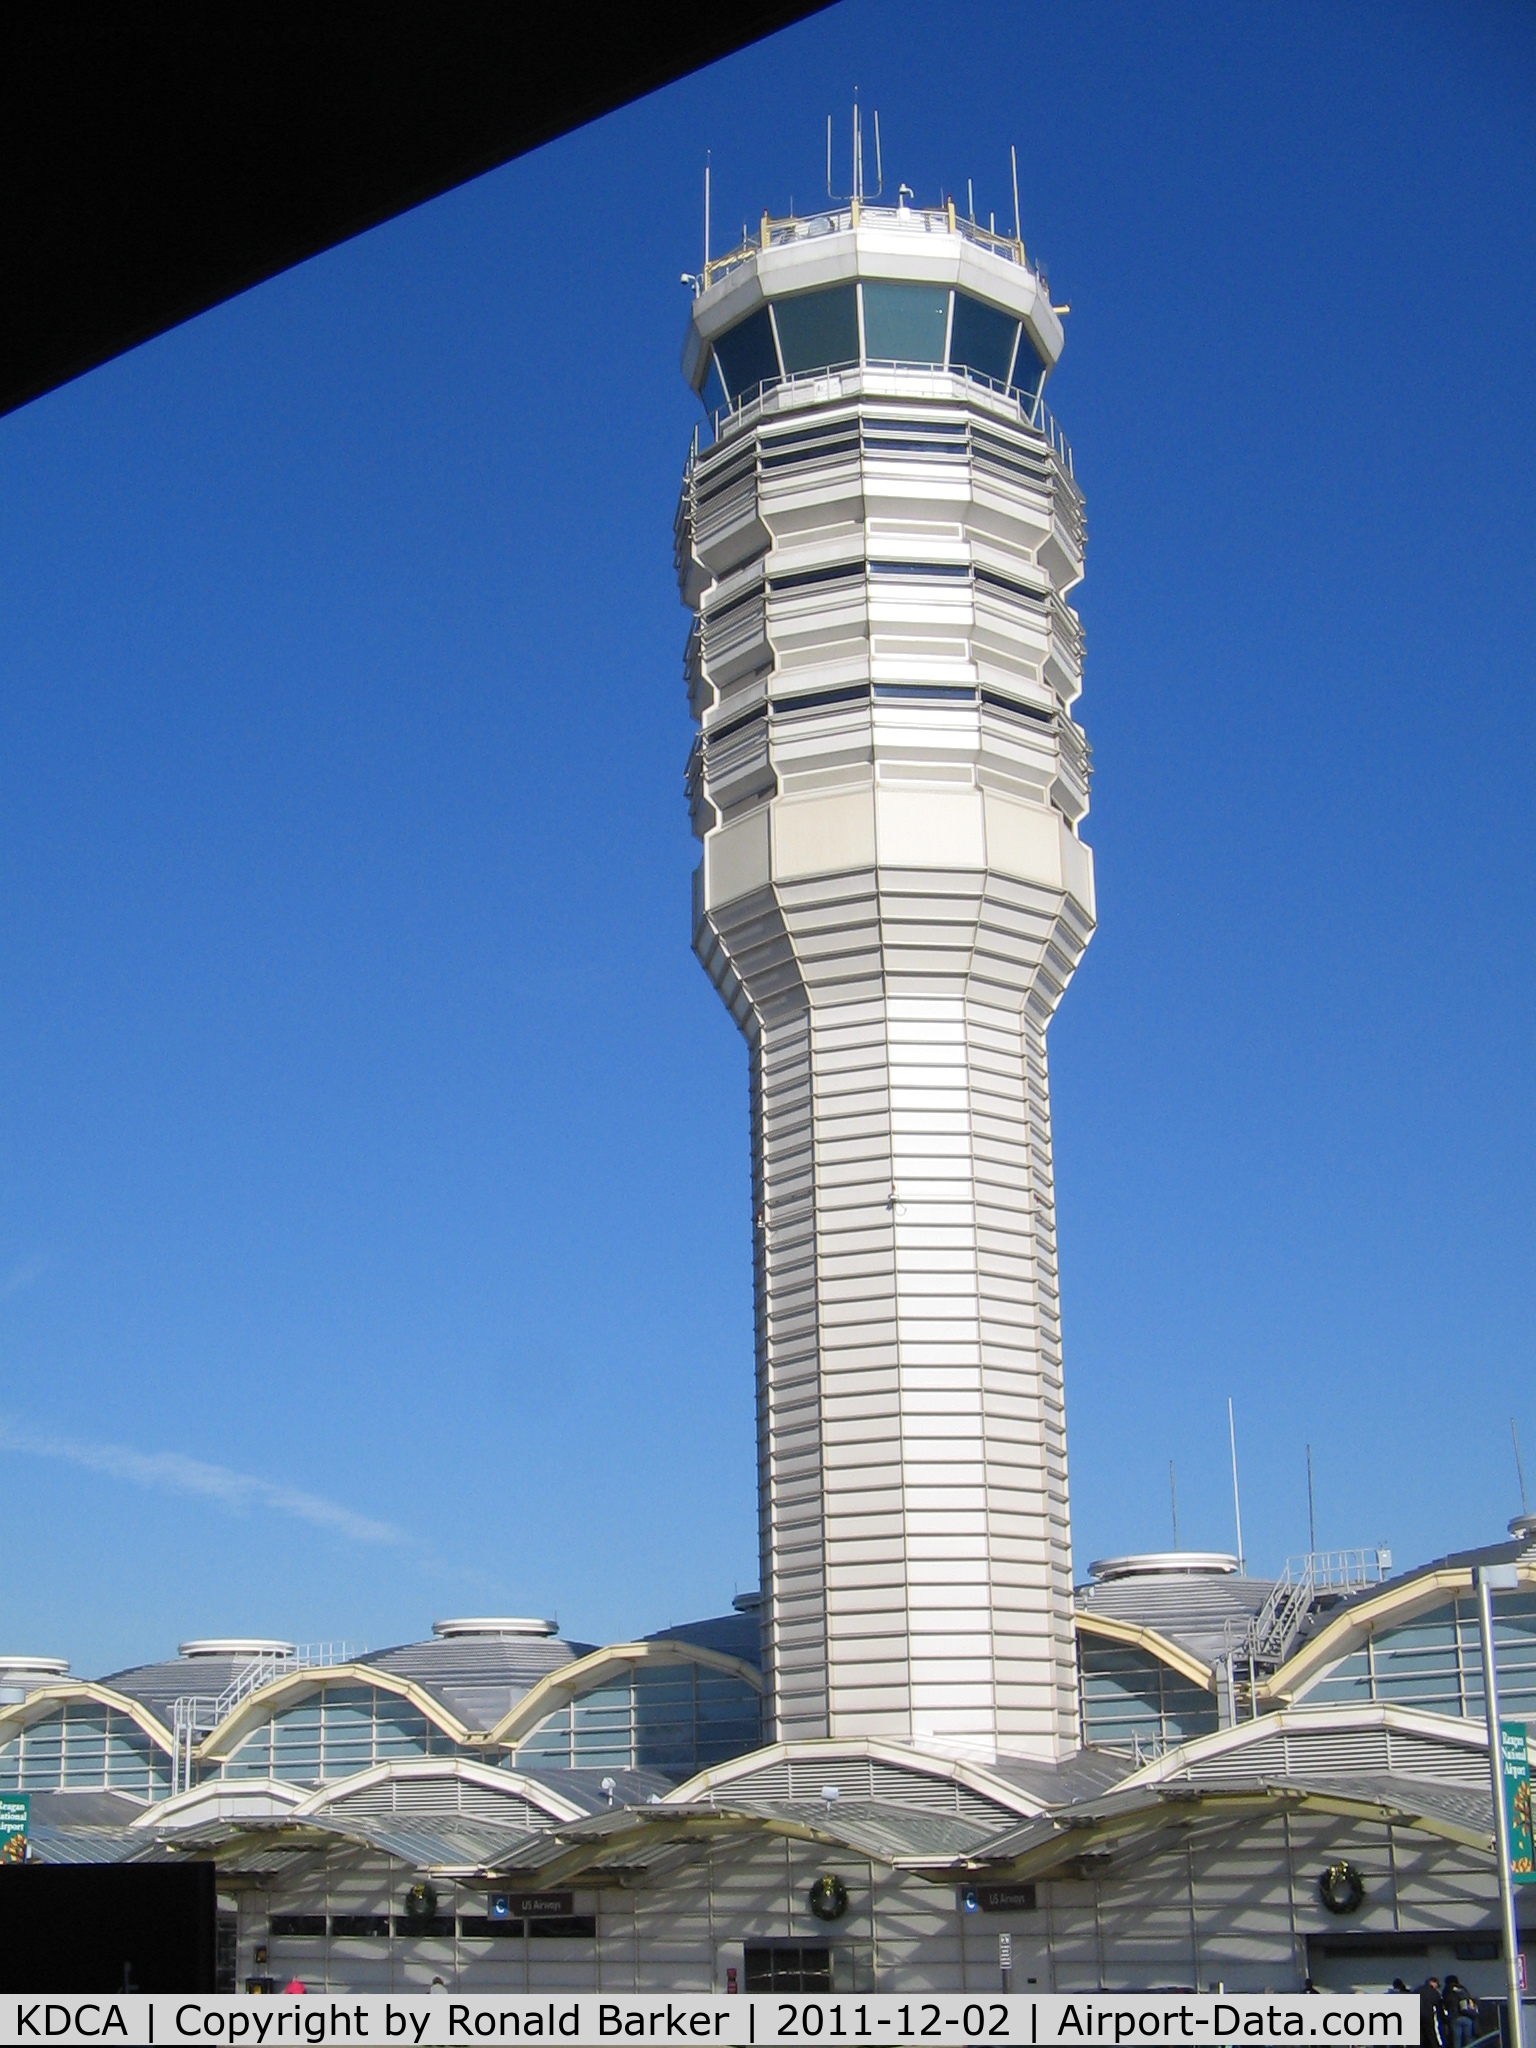 Ronald Reagan Washington National Airport (DCA) - DCA Tower